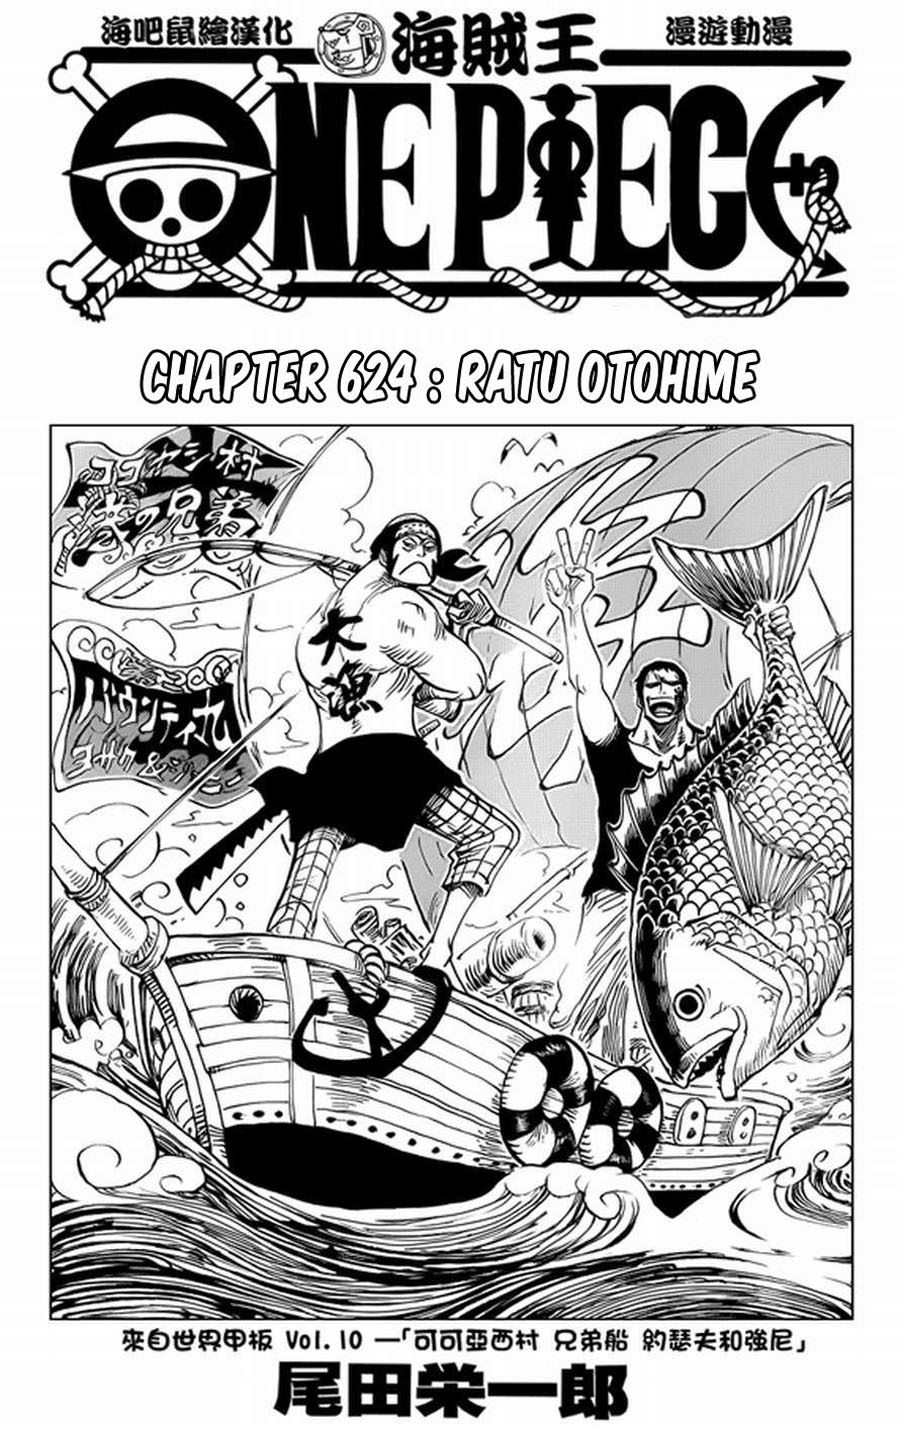 One Piece Chapter 624 – Ratu Otohime - 109